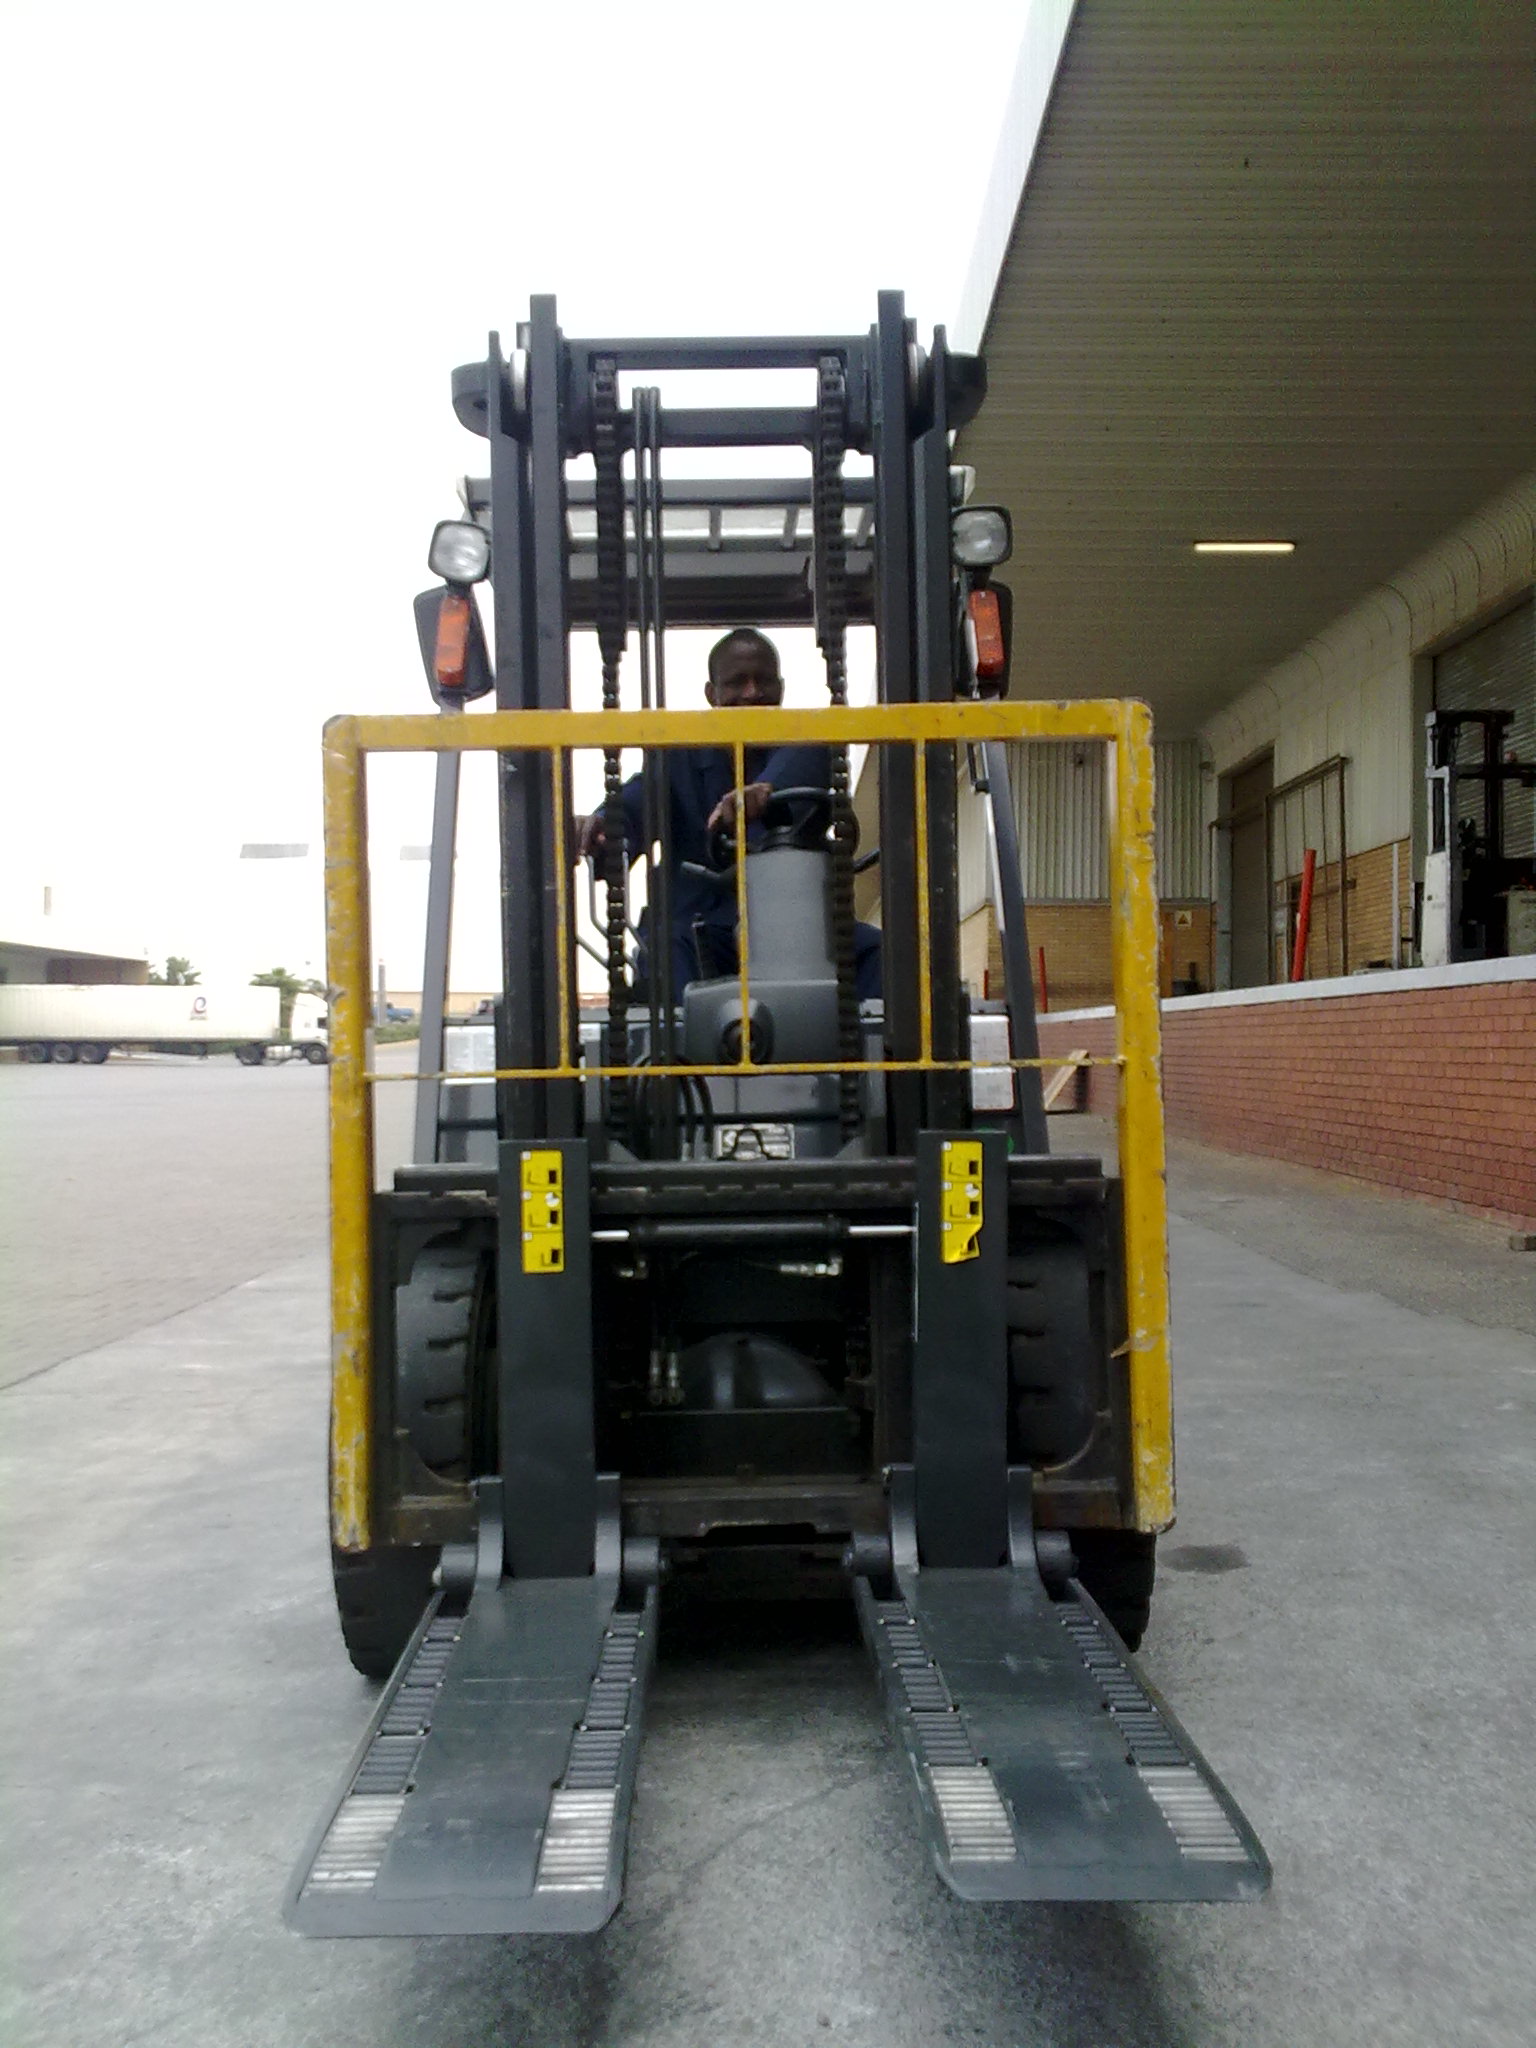 Forklift palletless handling attachment, RollerForks for handling DELL computers at Schenker Logistics